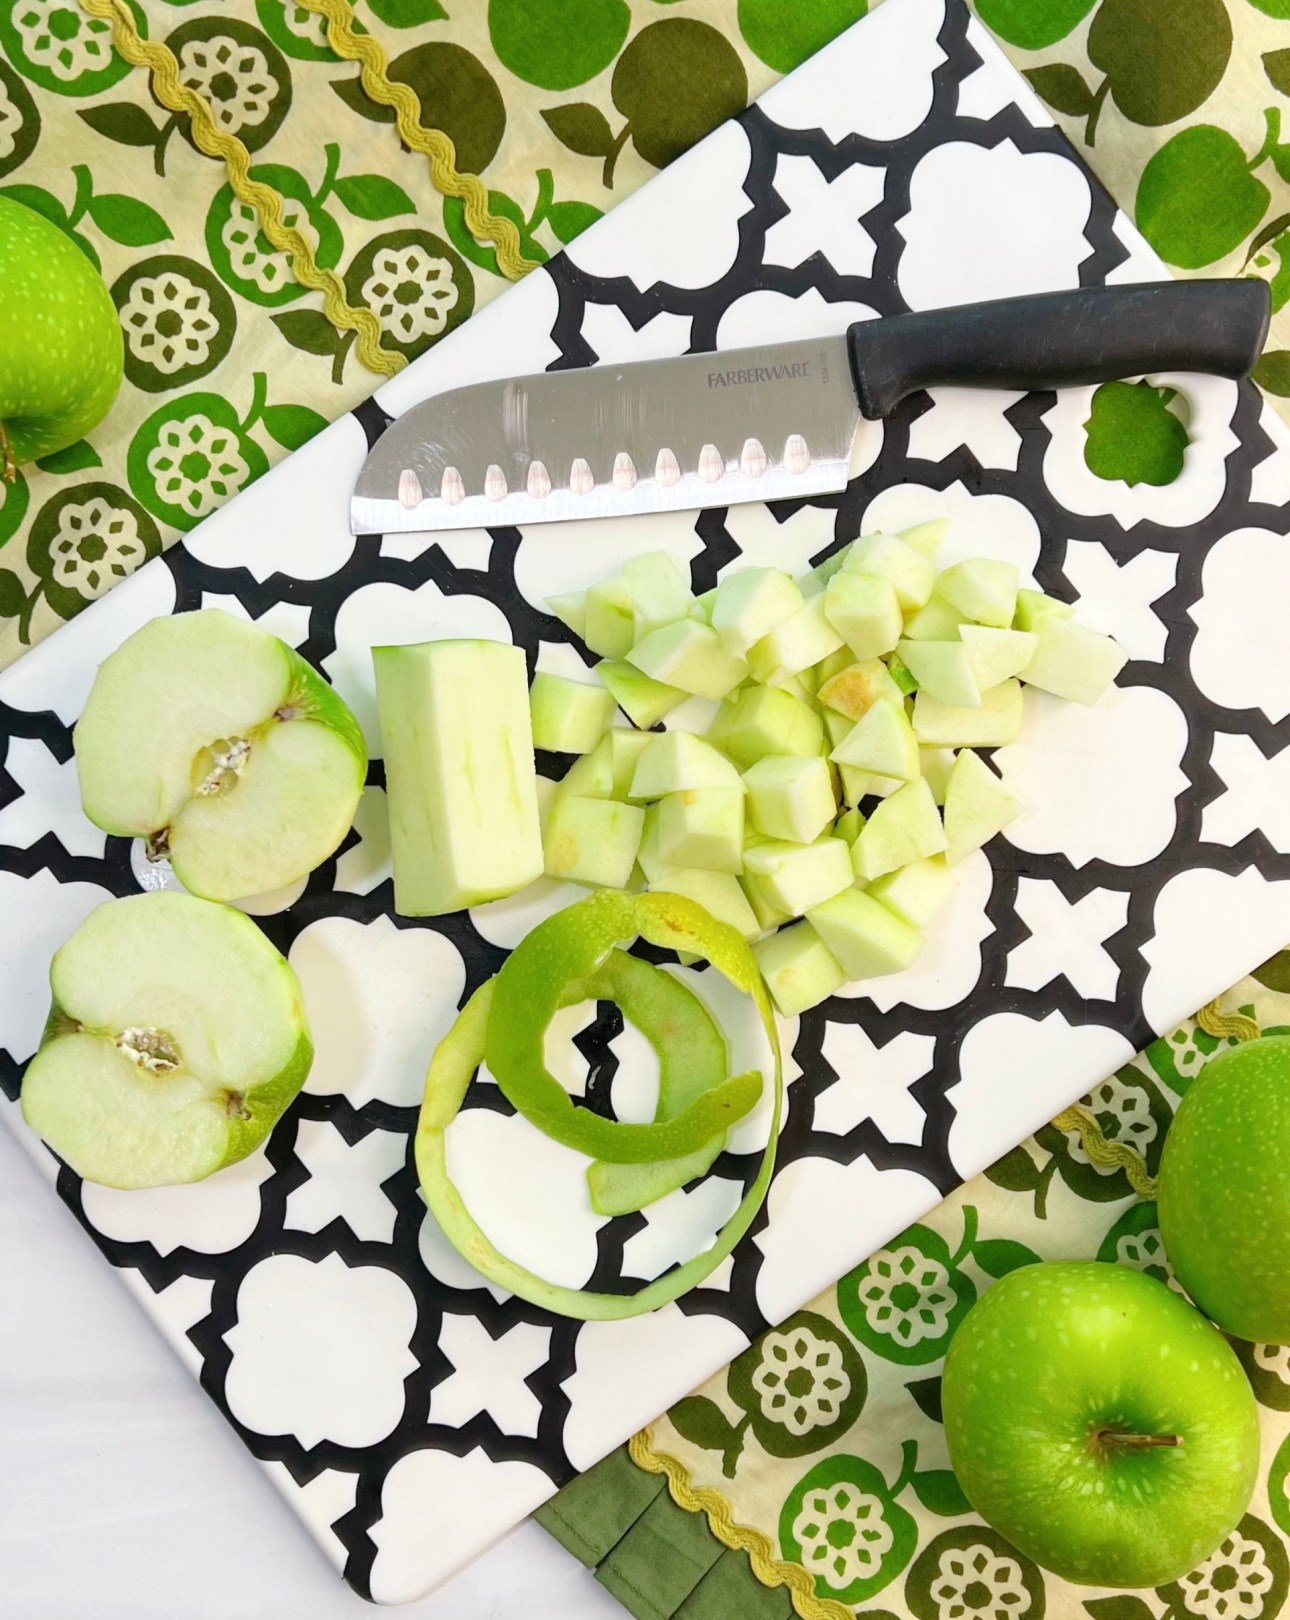 Sliced Green Apples